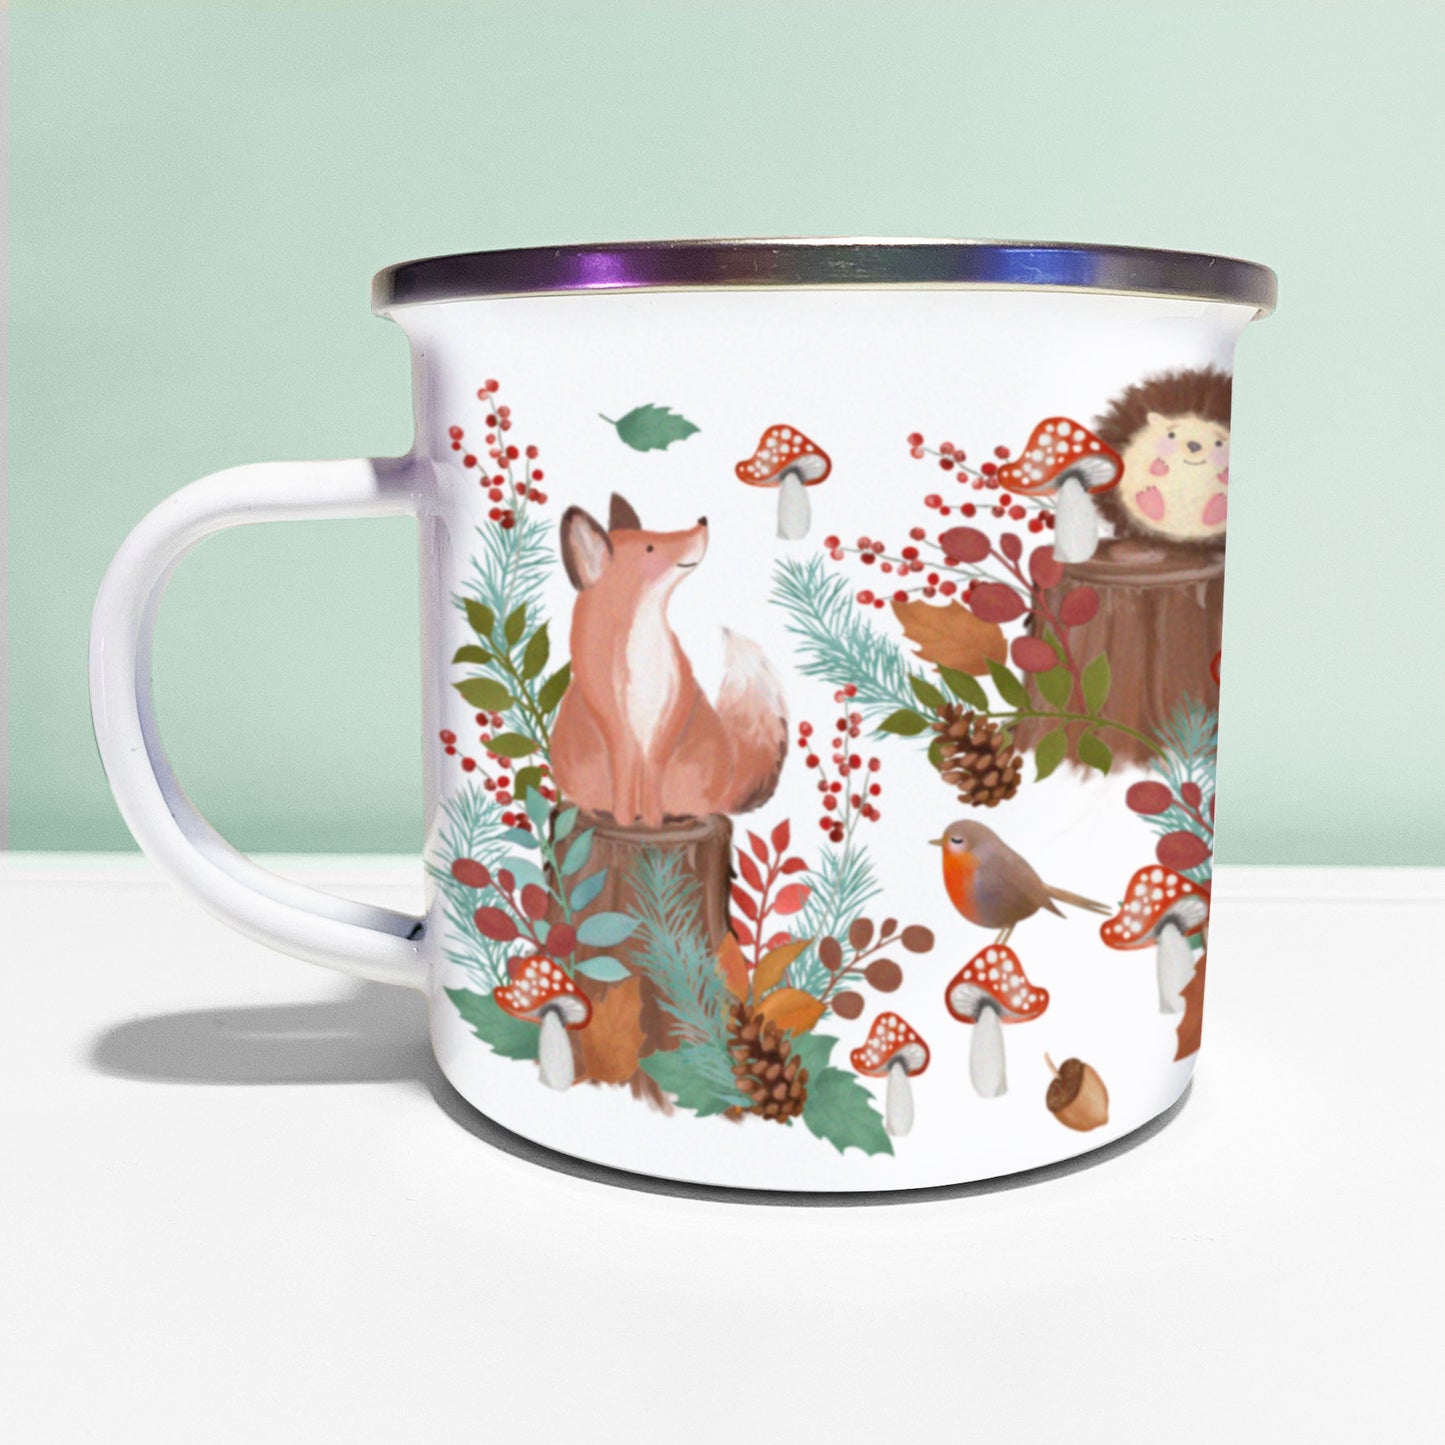 Personalised Woodland Animals Enamel Mug. Personalised Camping cup. Cute Animal Mug.